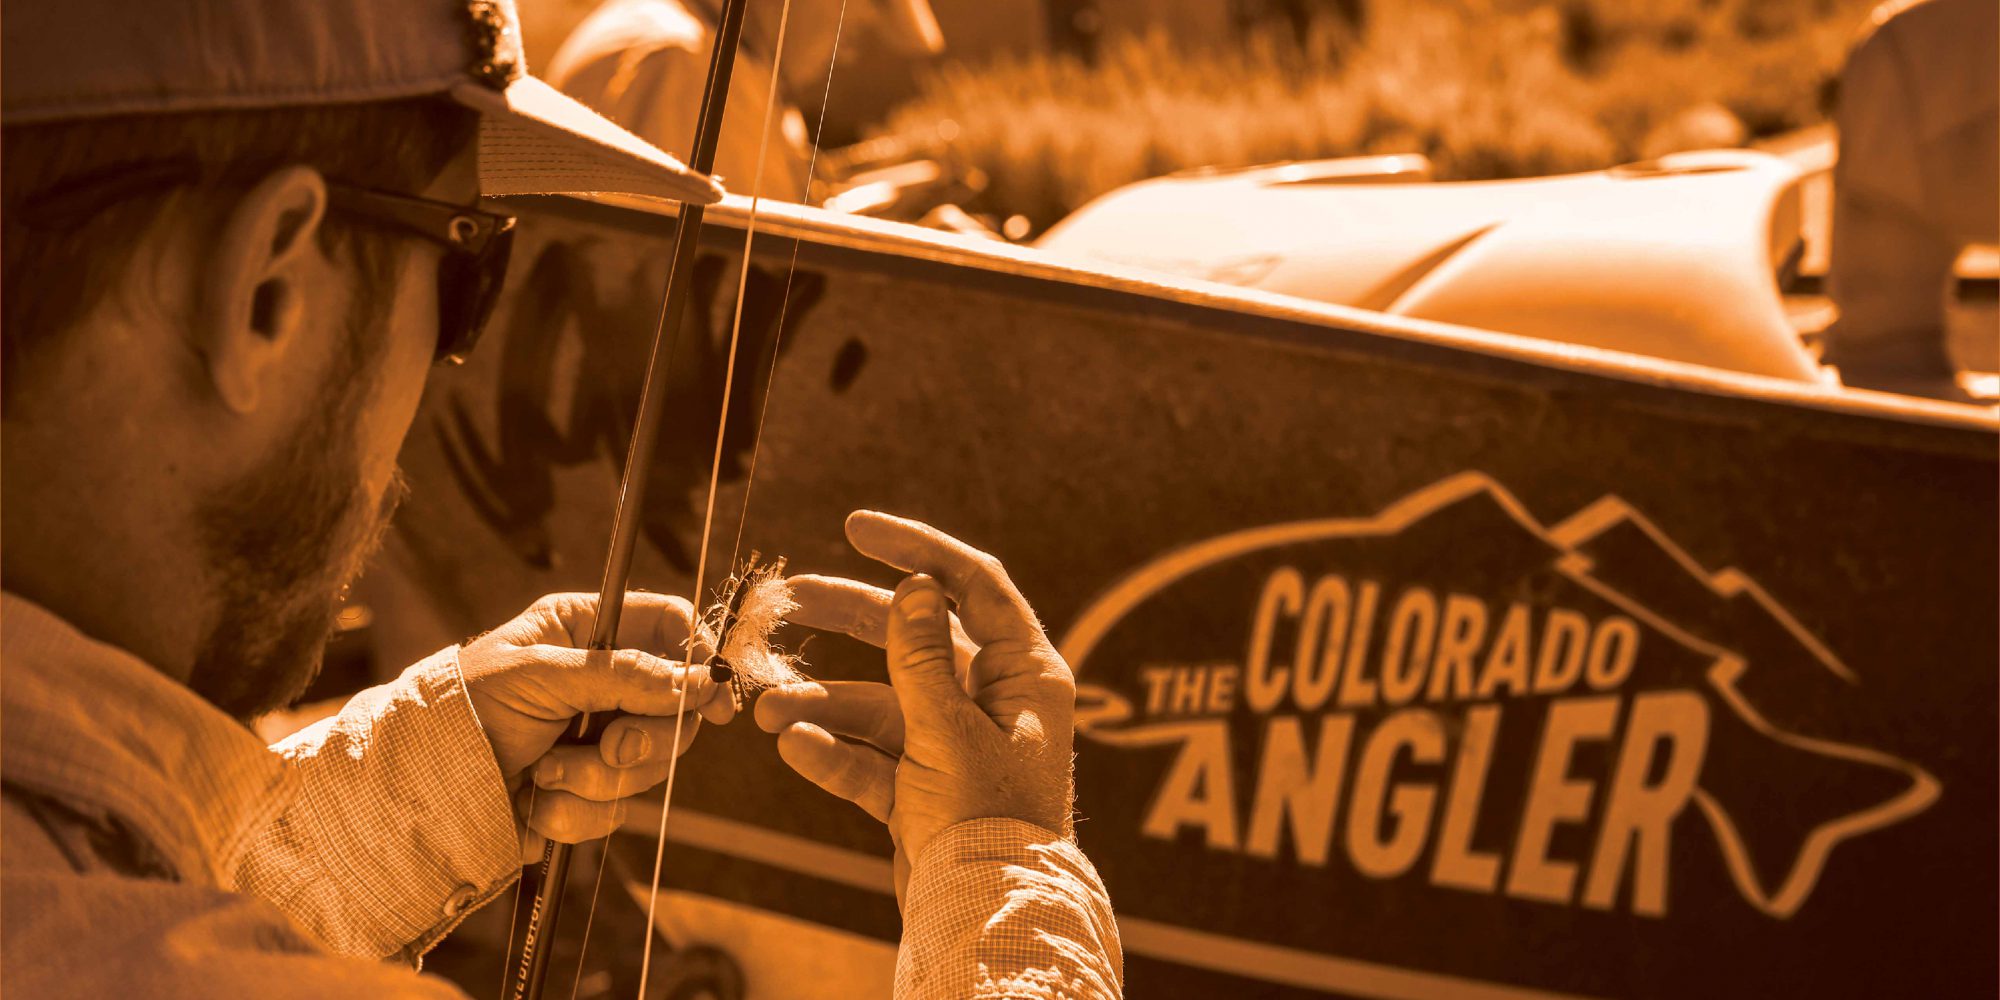 The Colorado Fishing Report - July 6, 2011 - The Colorado Angler